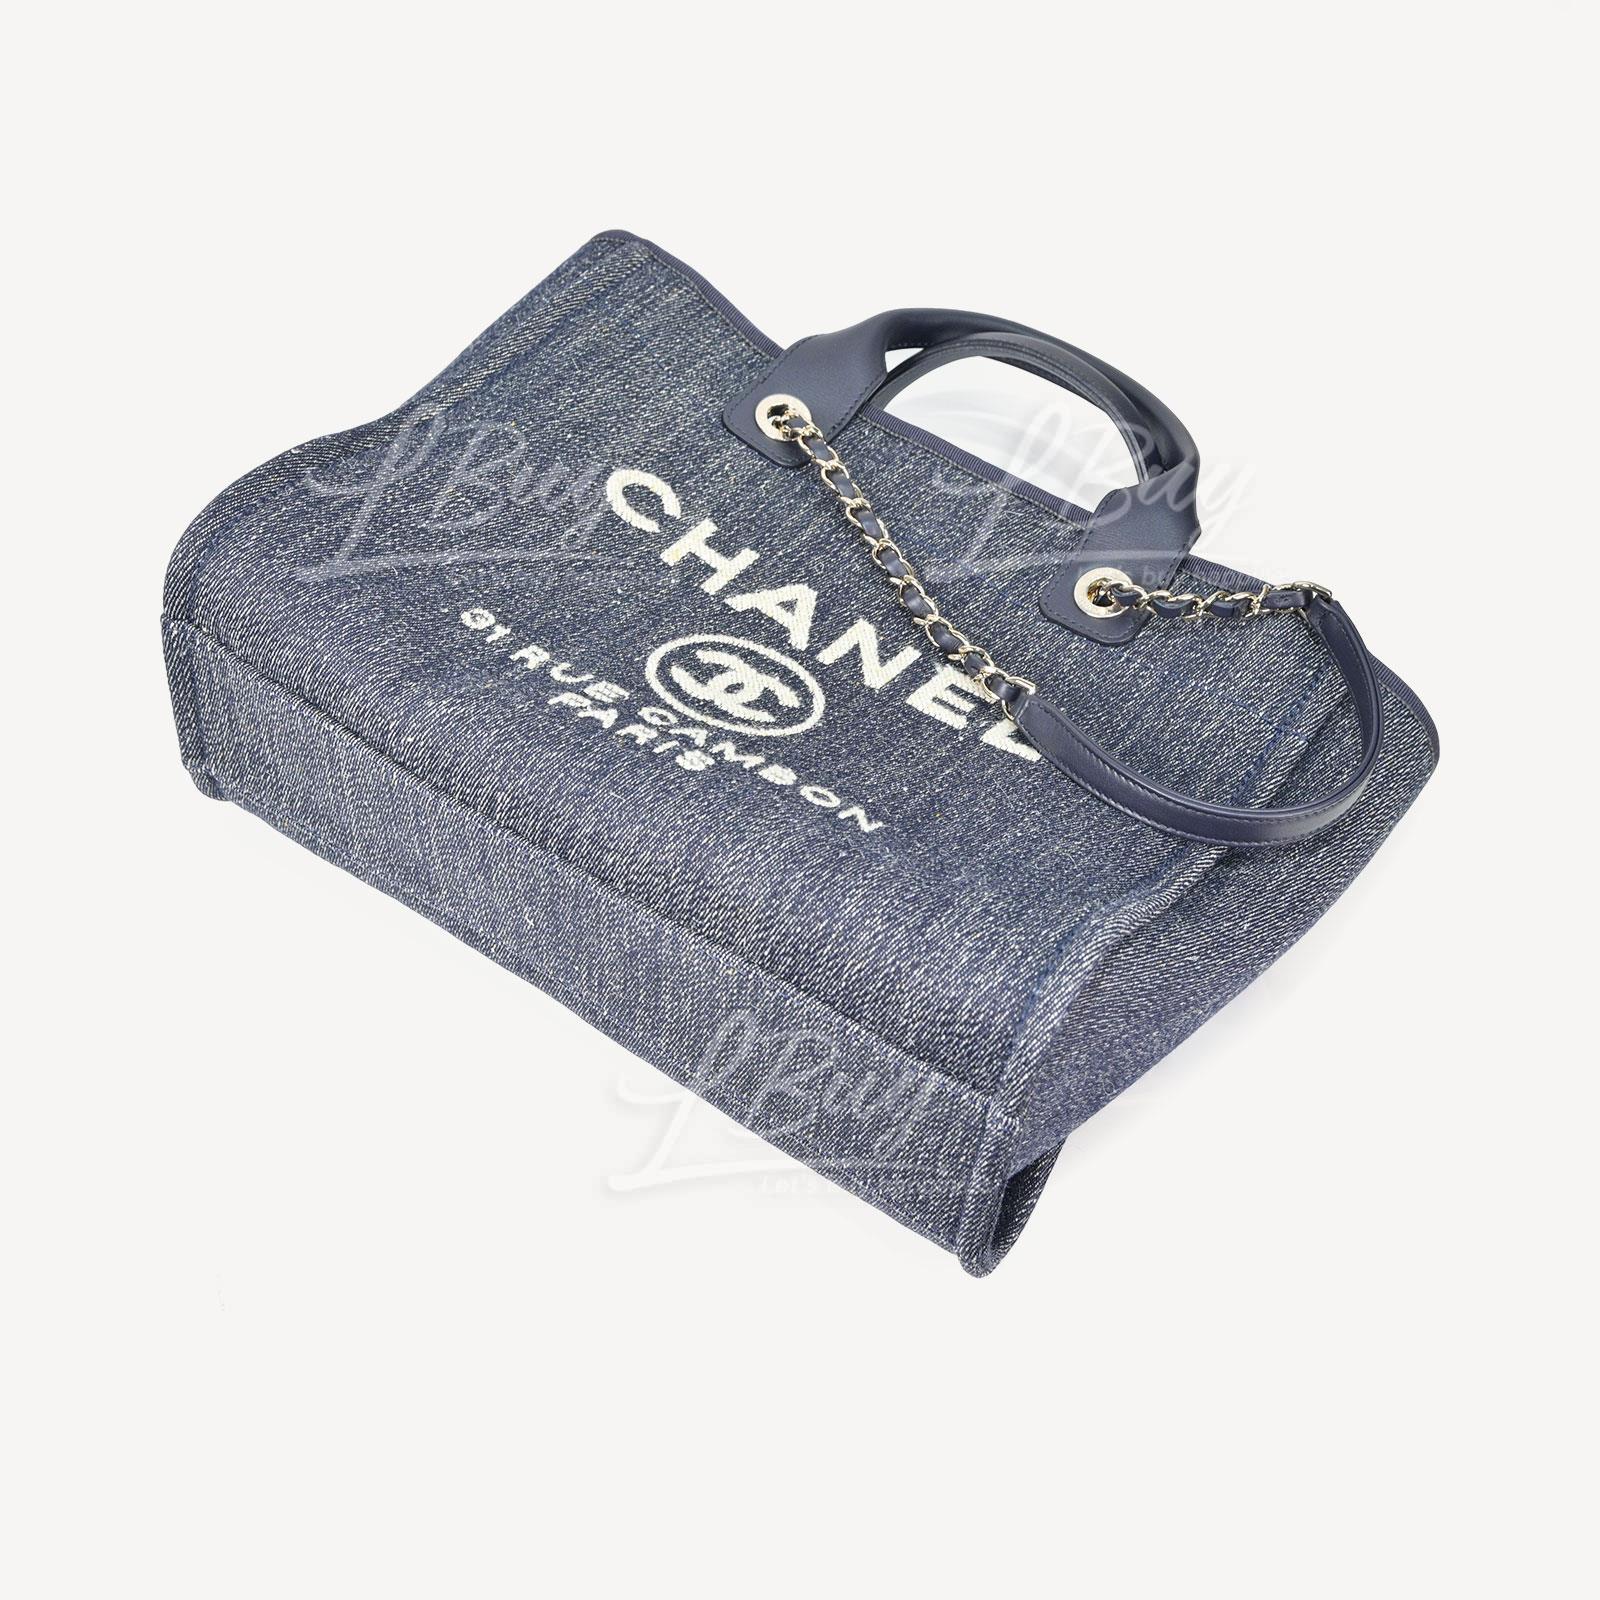 CHANEL-Chanel Deauville Large Denim Tote Bag Dark Blue A66941